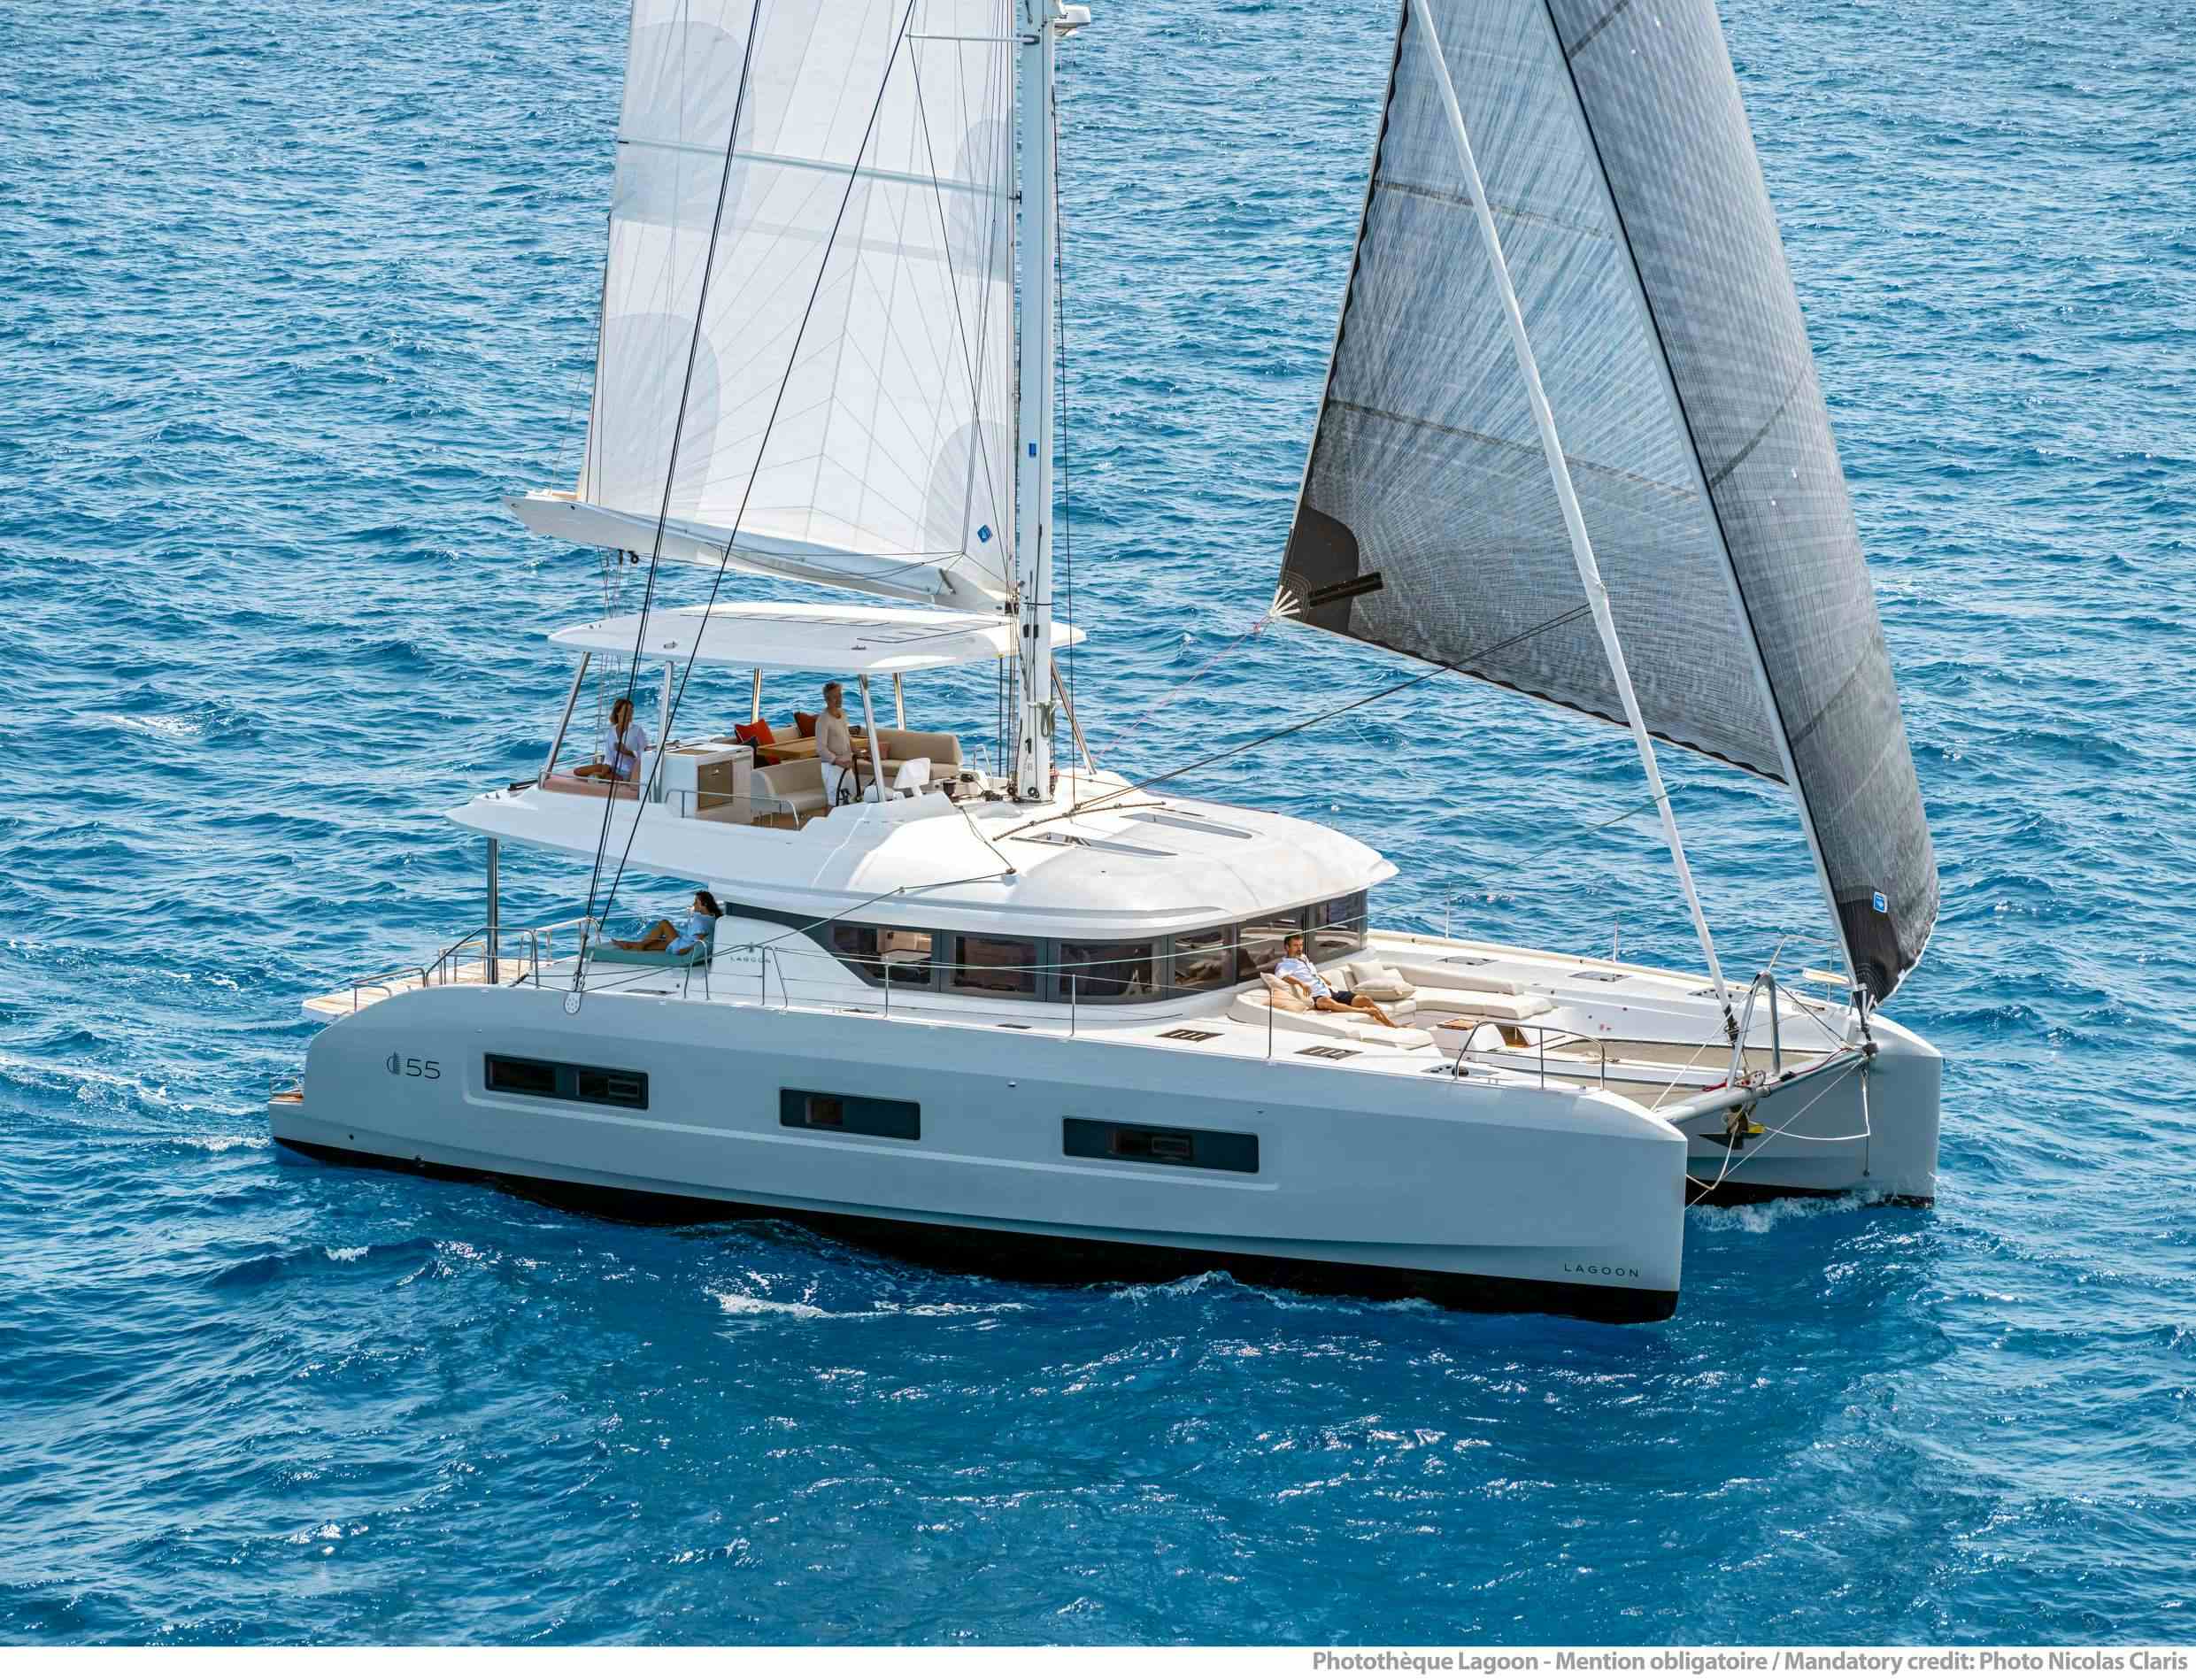 VALIUM 55 - Yacht Charter Birmingham & Boat hire in Greece 1